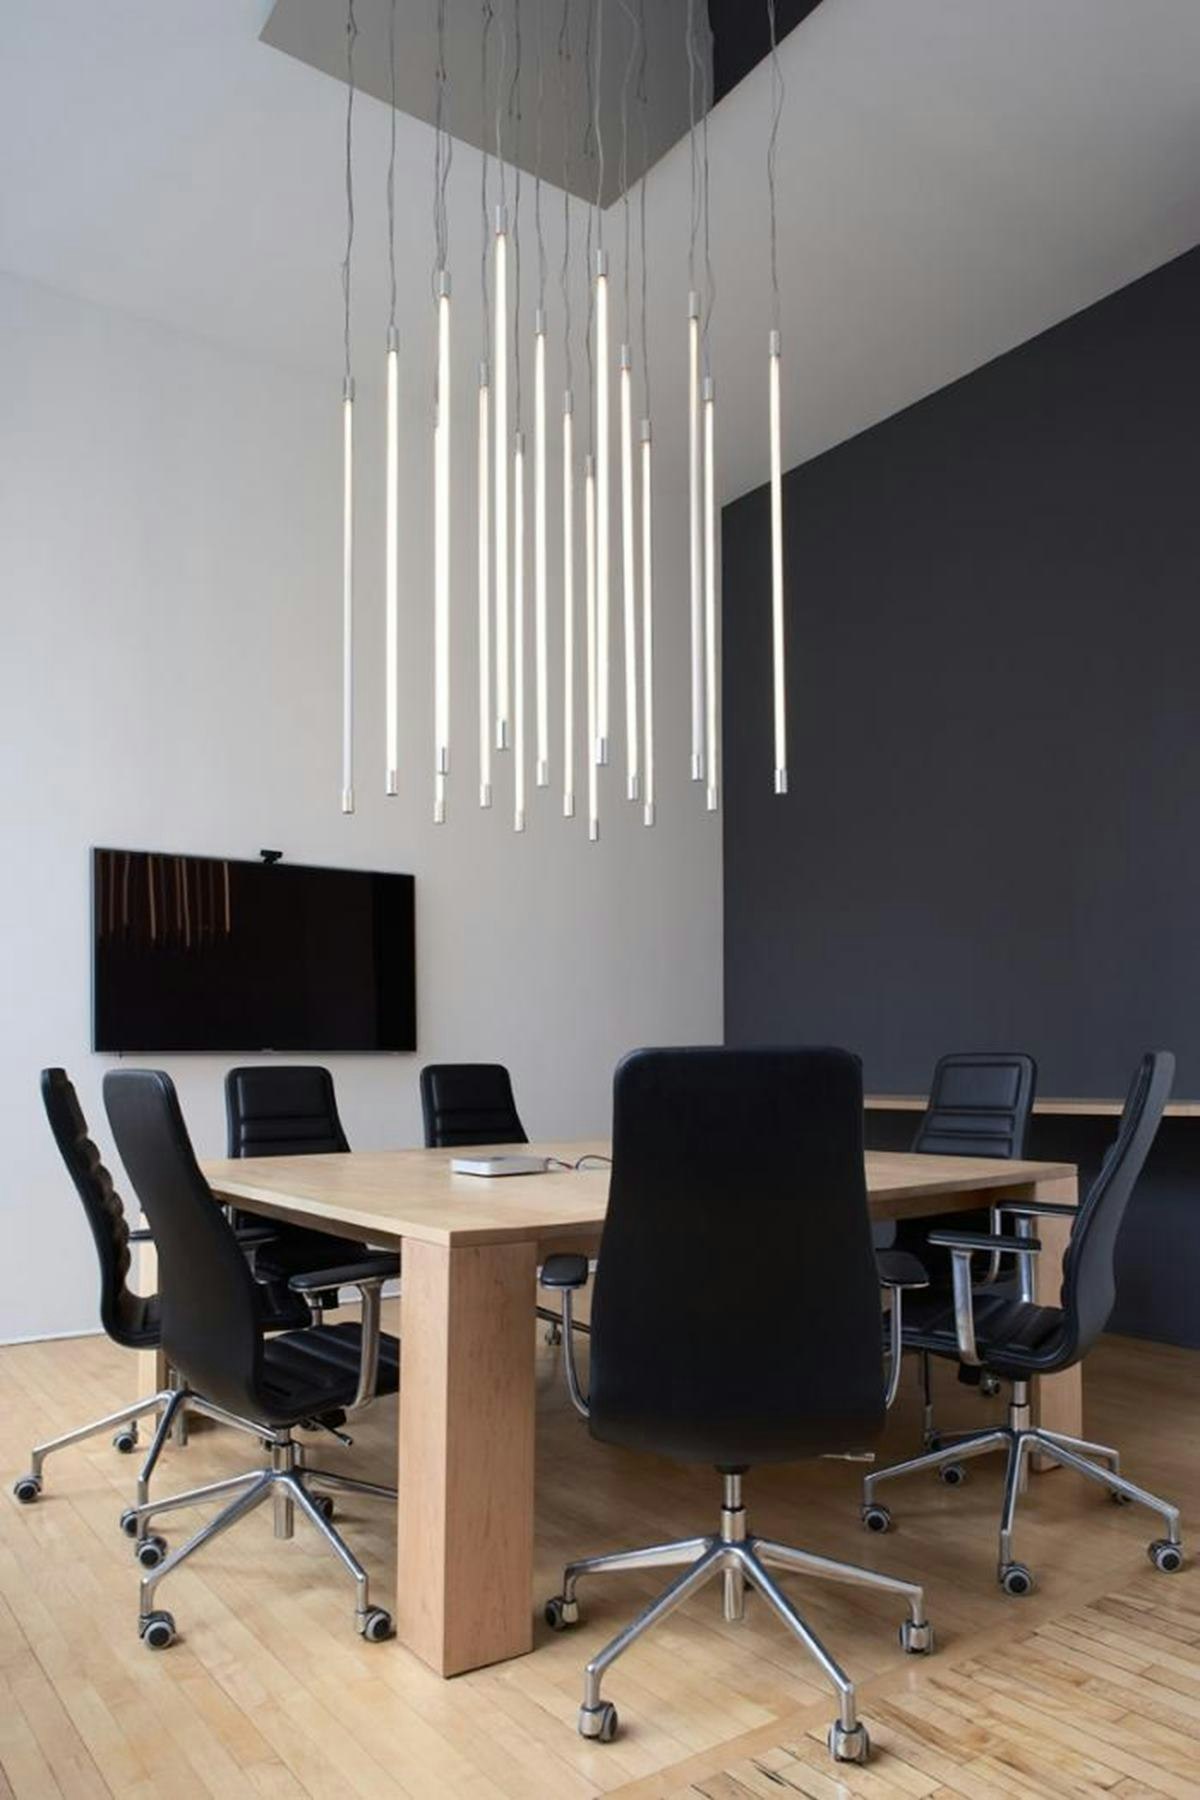 This light-tube lit boardroom